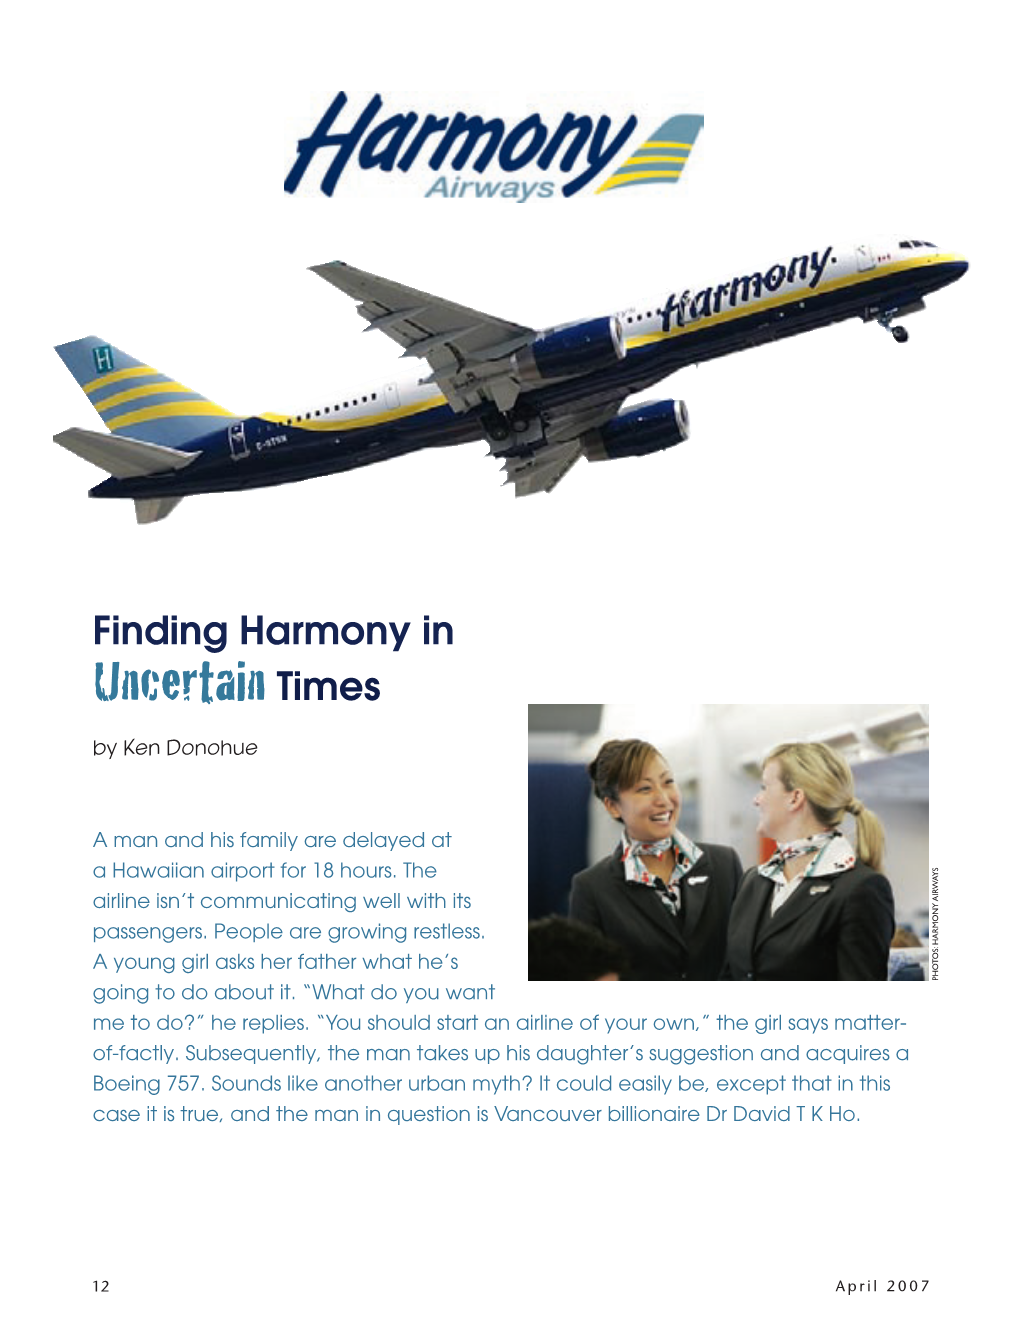 HARMONY AIRWAYS HARMONY PHOTOS: Going to Do About It